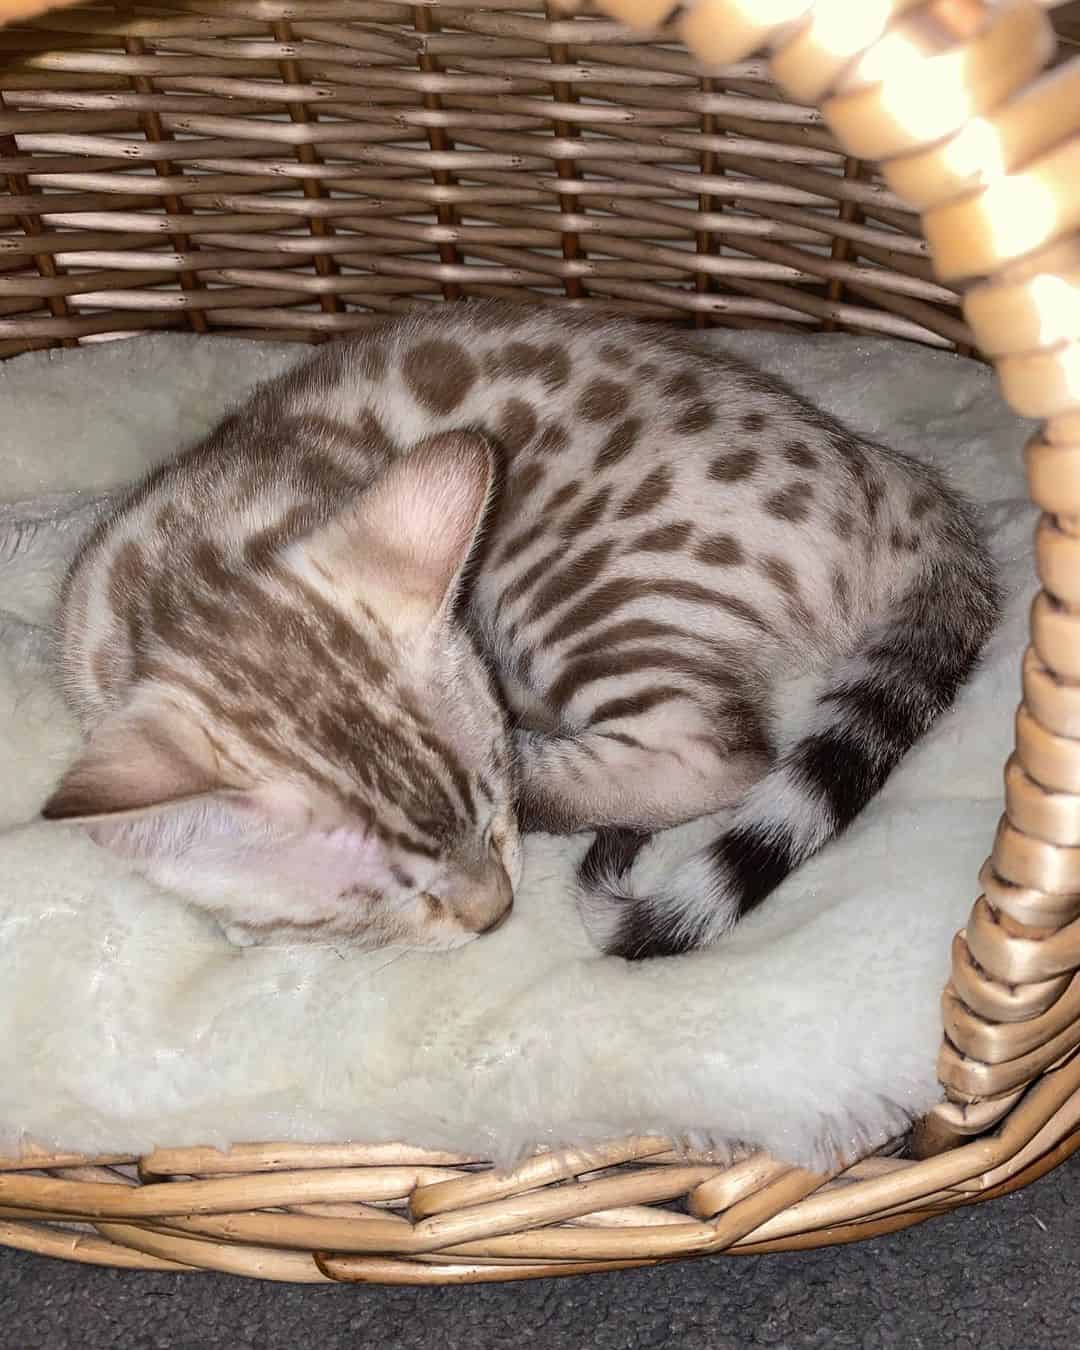 Snow Seal Mink Bengal Cat sleeping in her basket